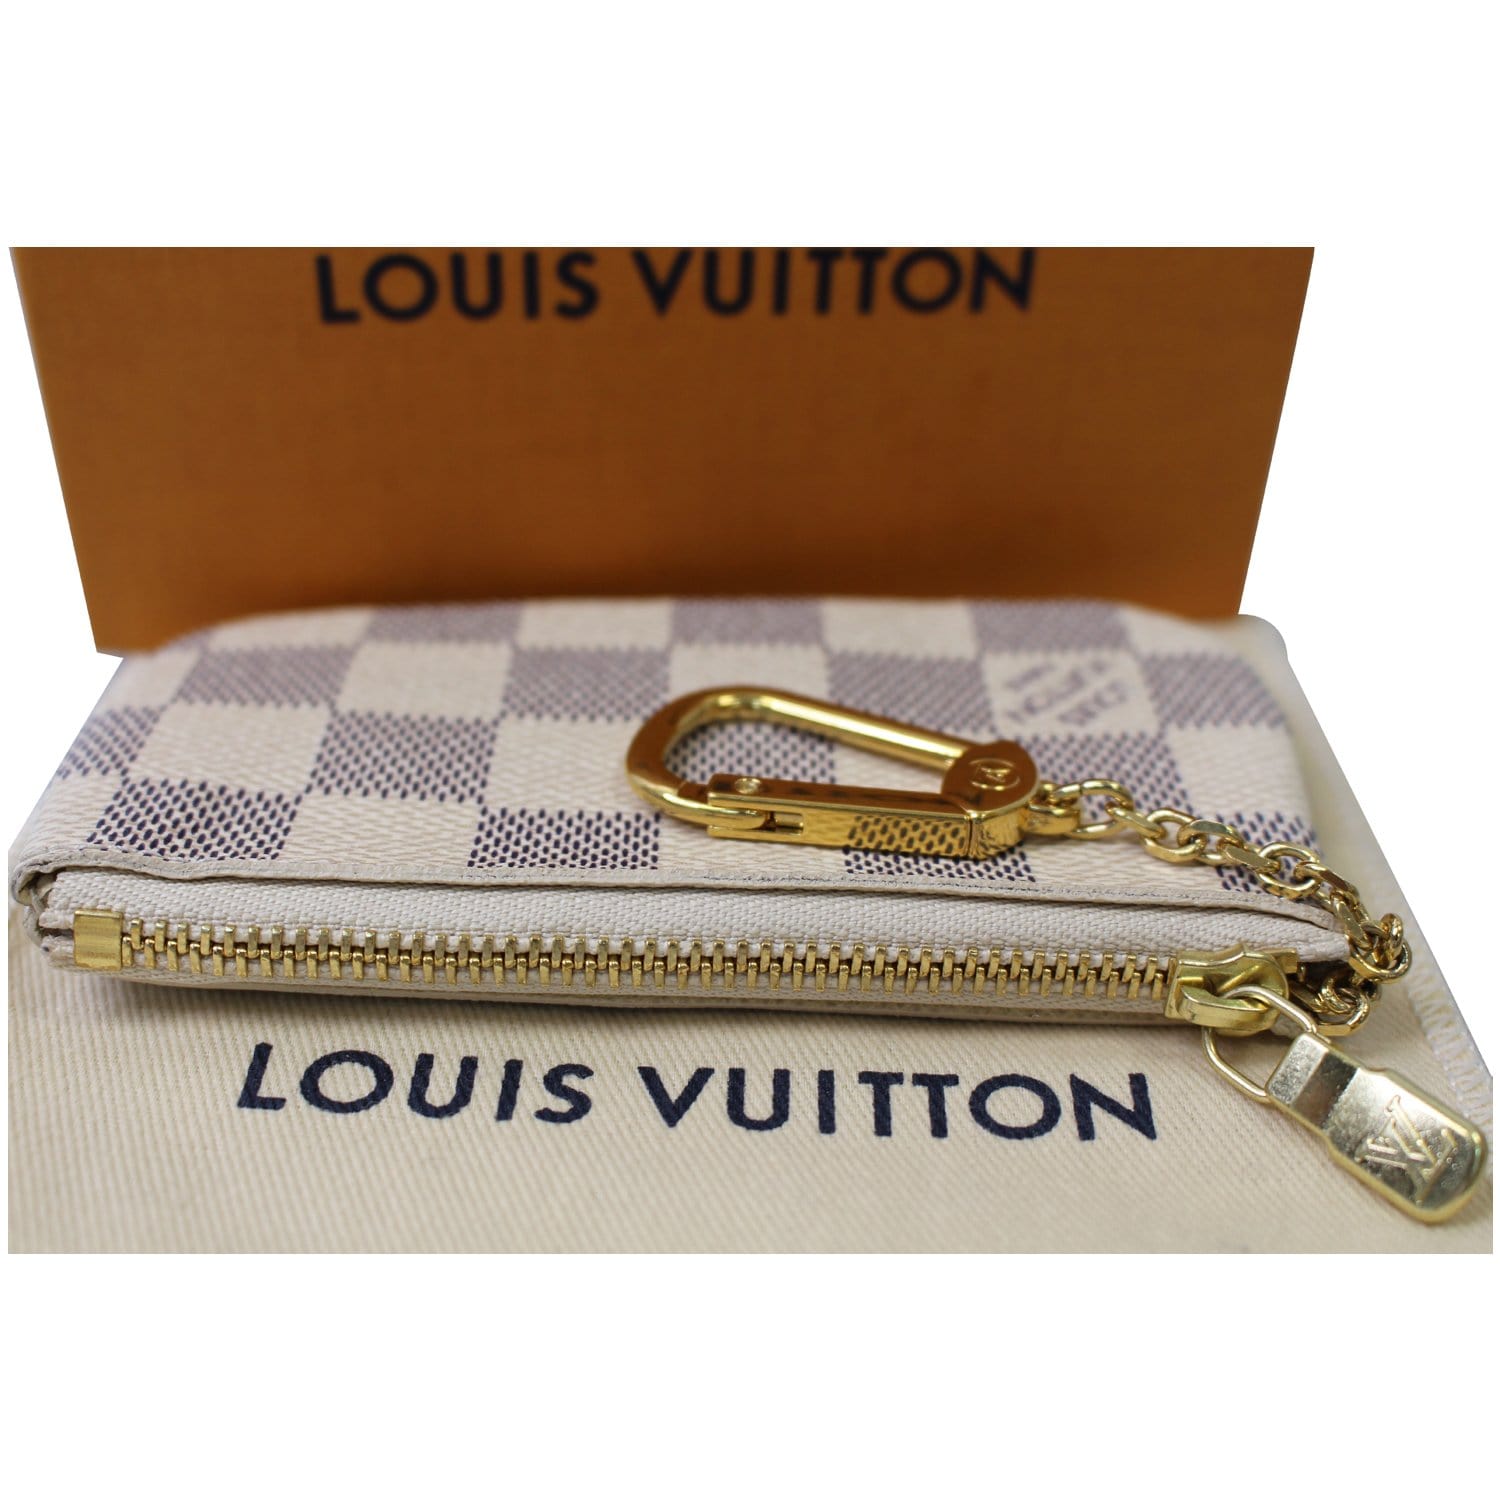 Louis Vuitton Key Coin Pouch Damier Azur White